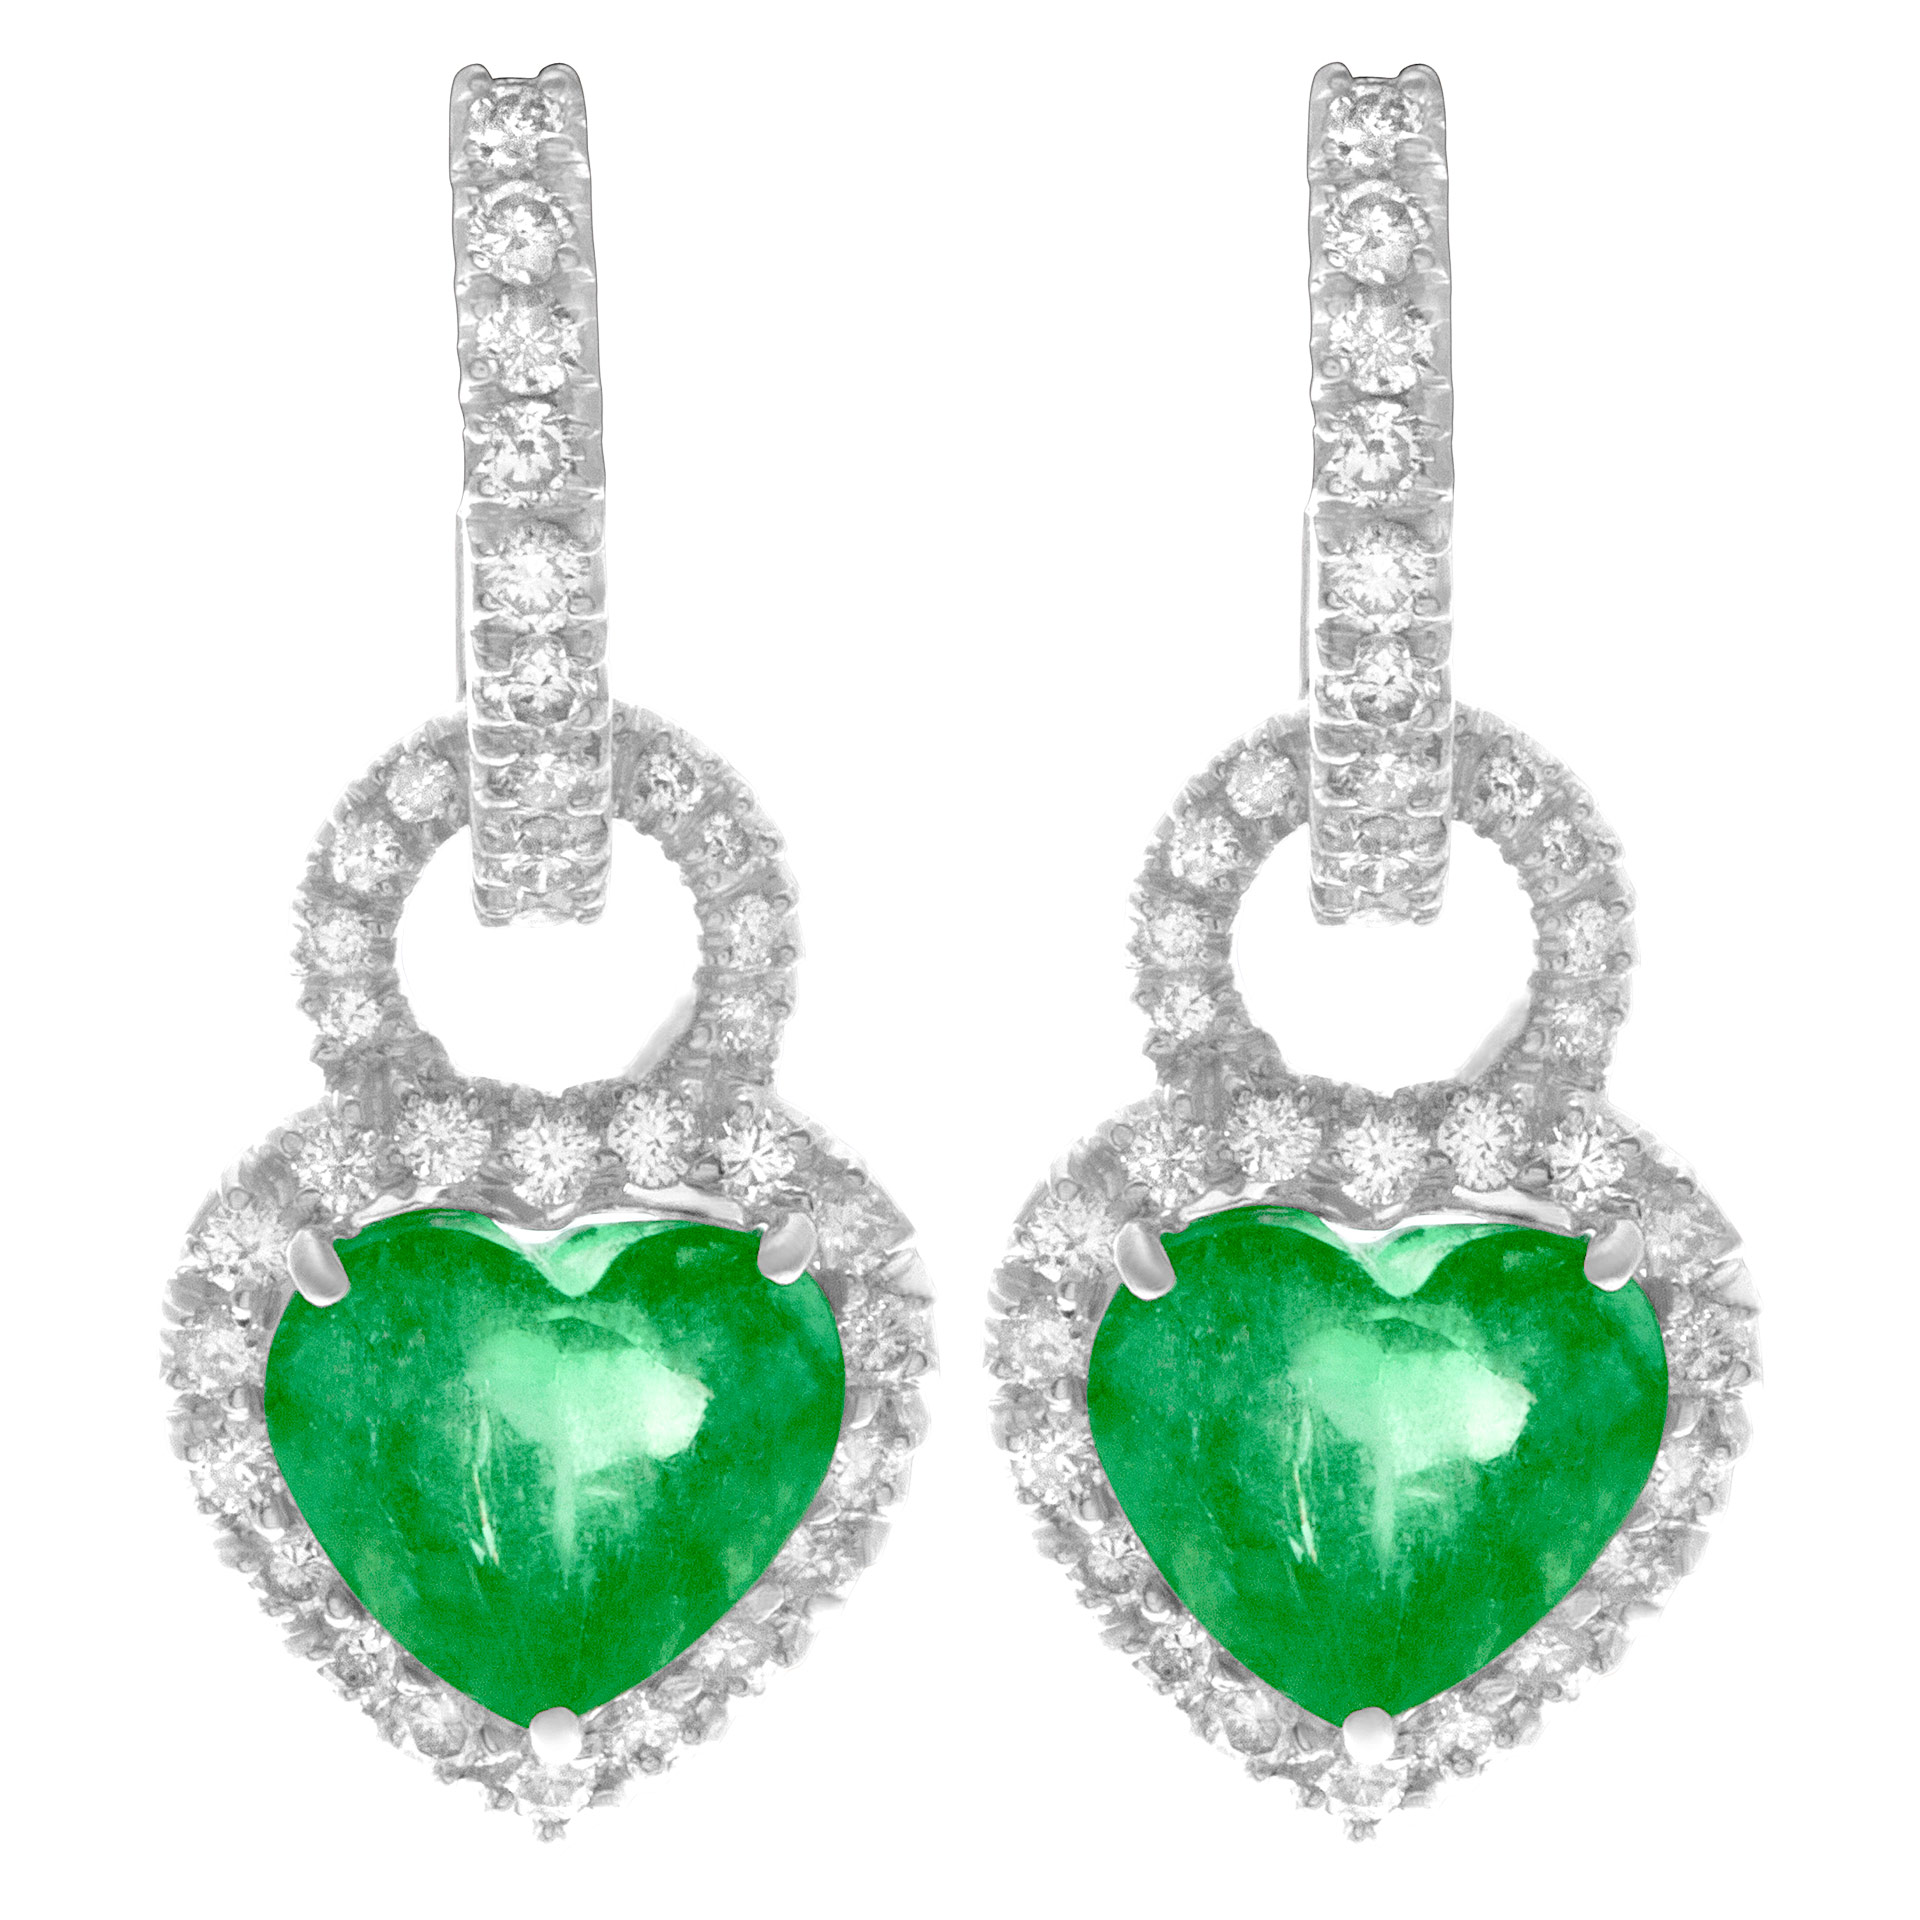 18k white gold diamond and emerald heart shaped earrings